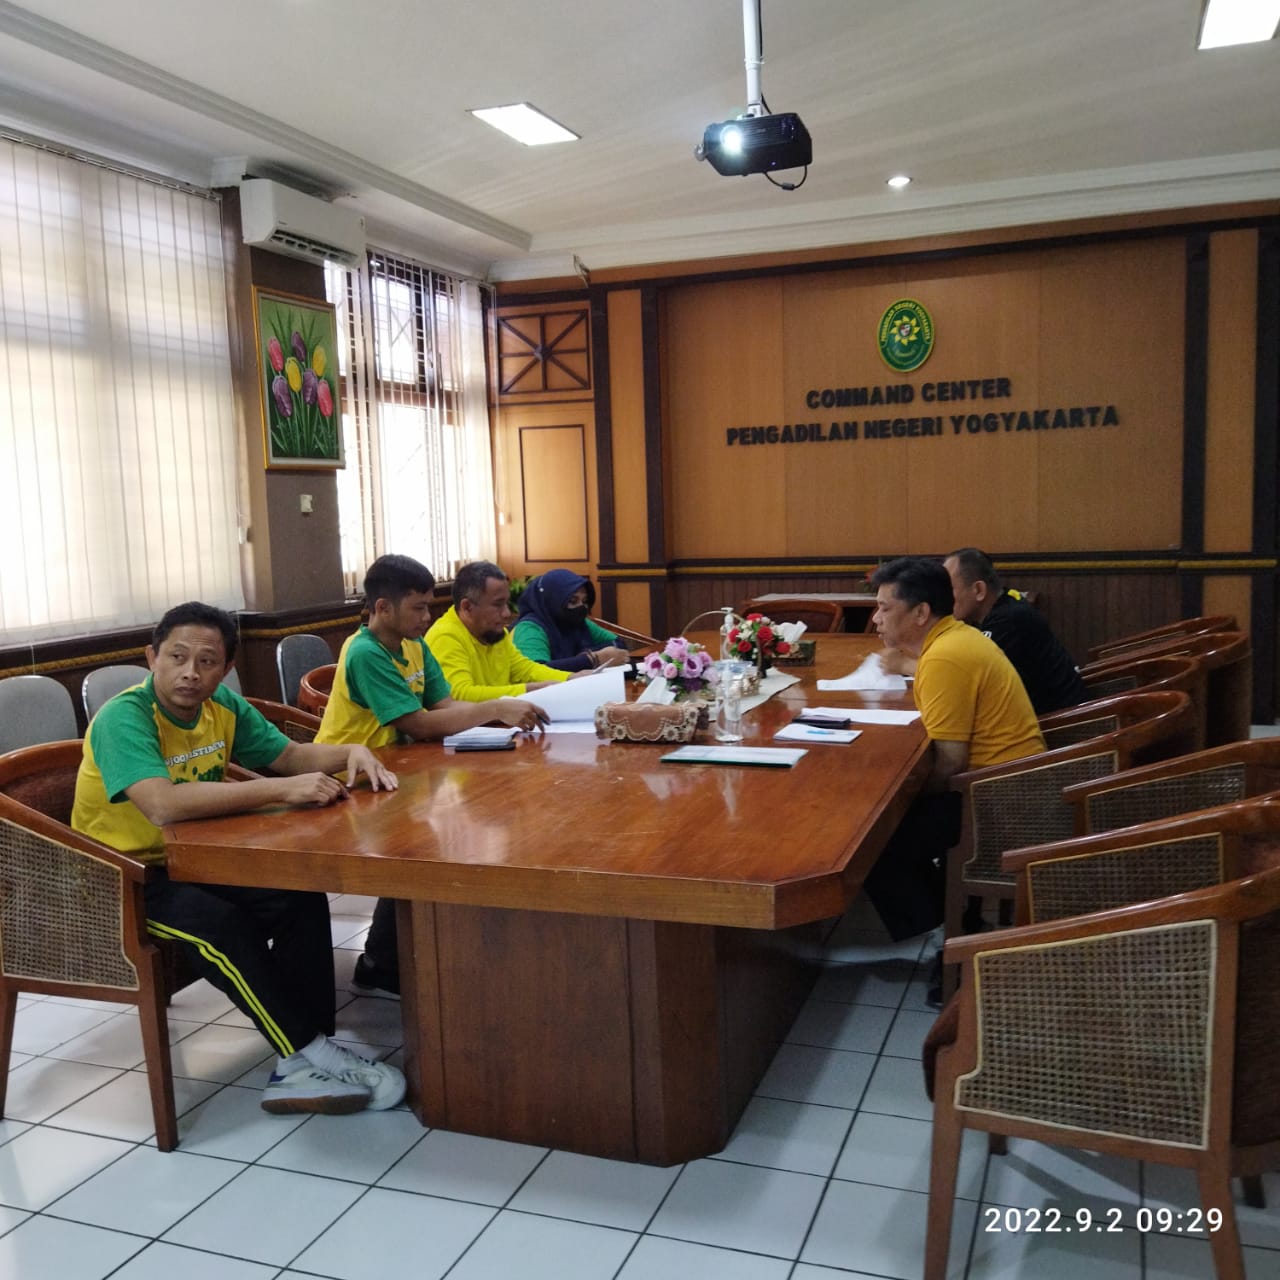 Rapat Koordinasi Usulan Peningkatan Kelas Pengadilan Negeri Yogyakarta